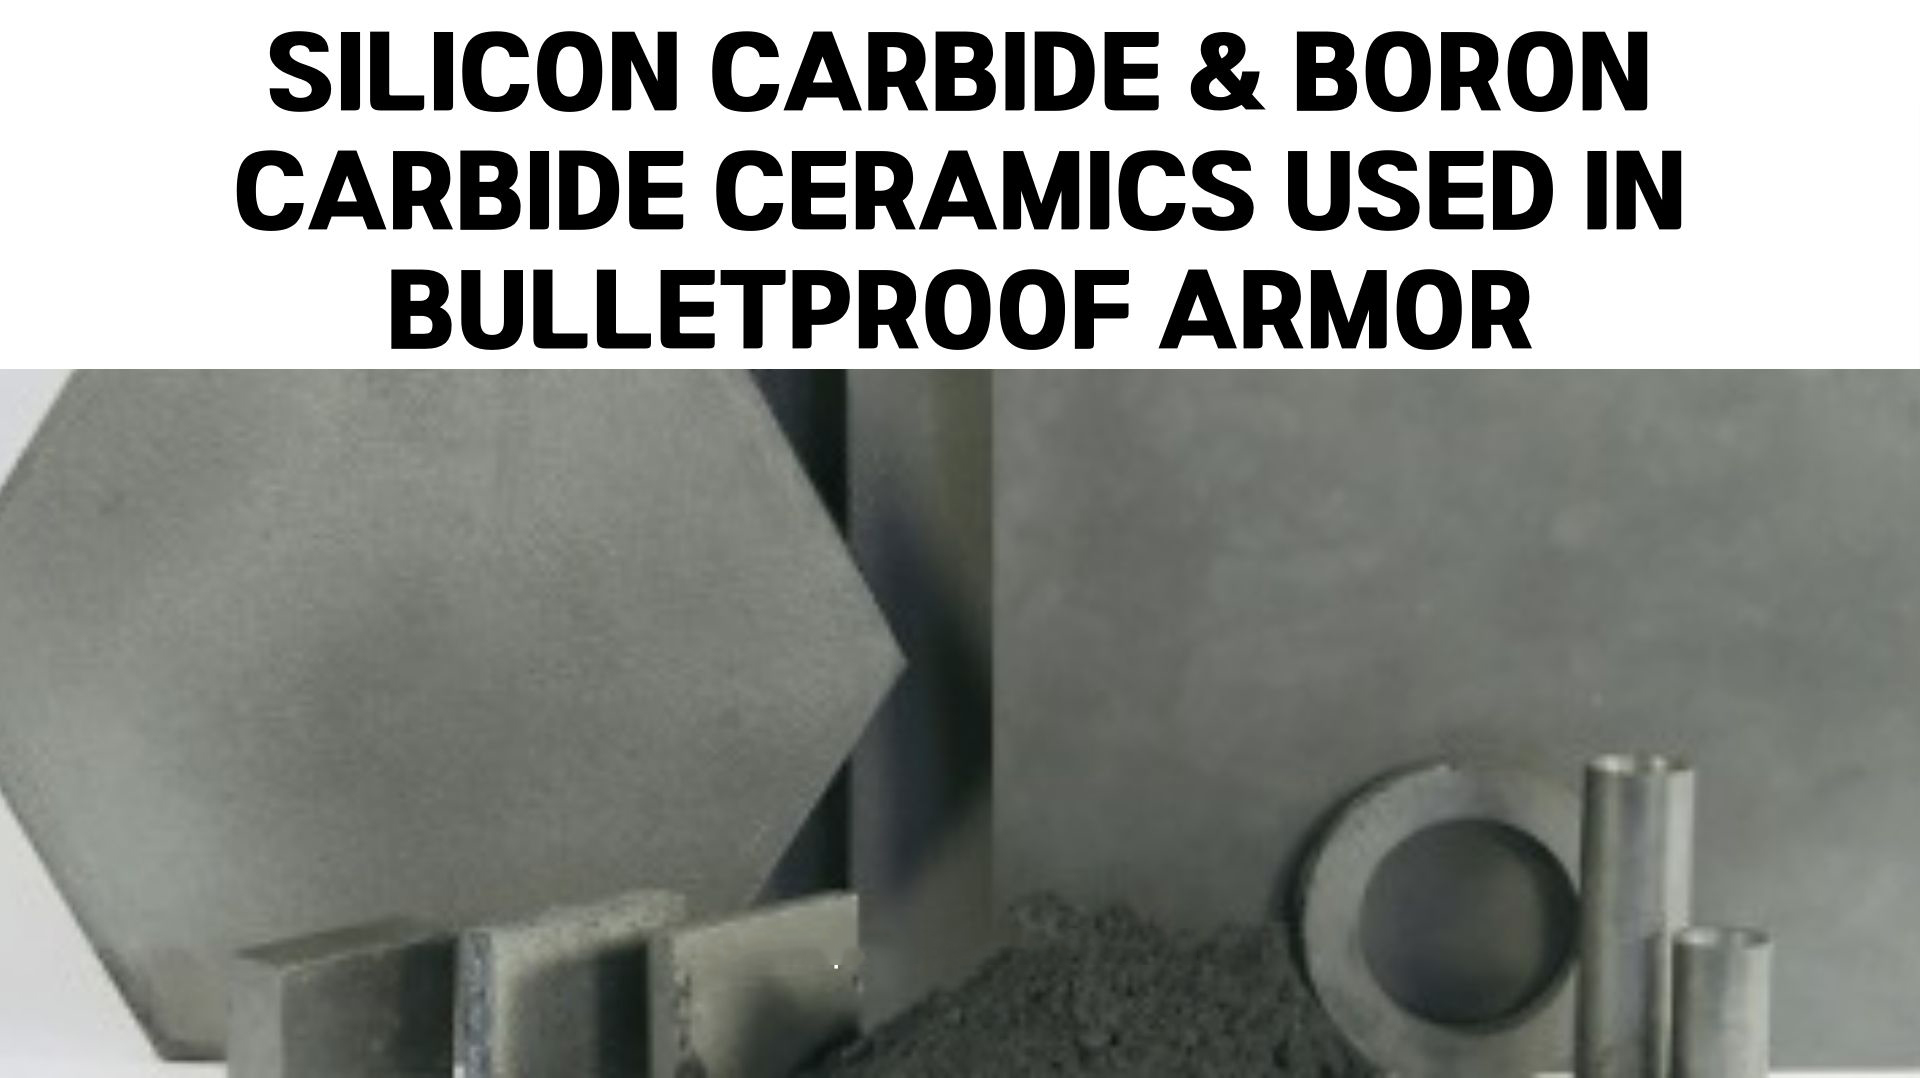 Silicon Carbide & Boron Carbide Ceramics Used in Bulletproof Armor